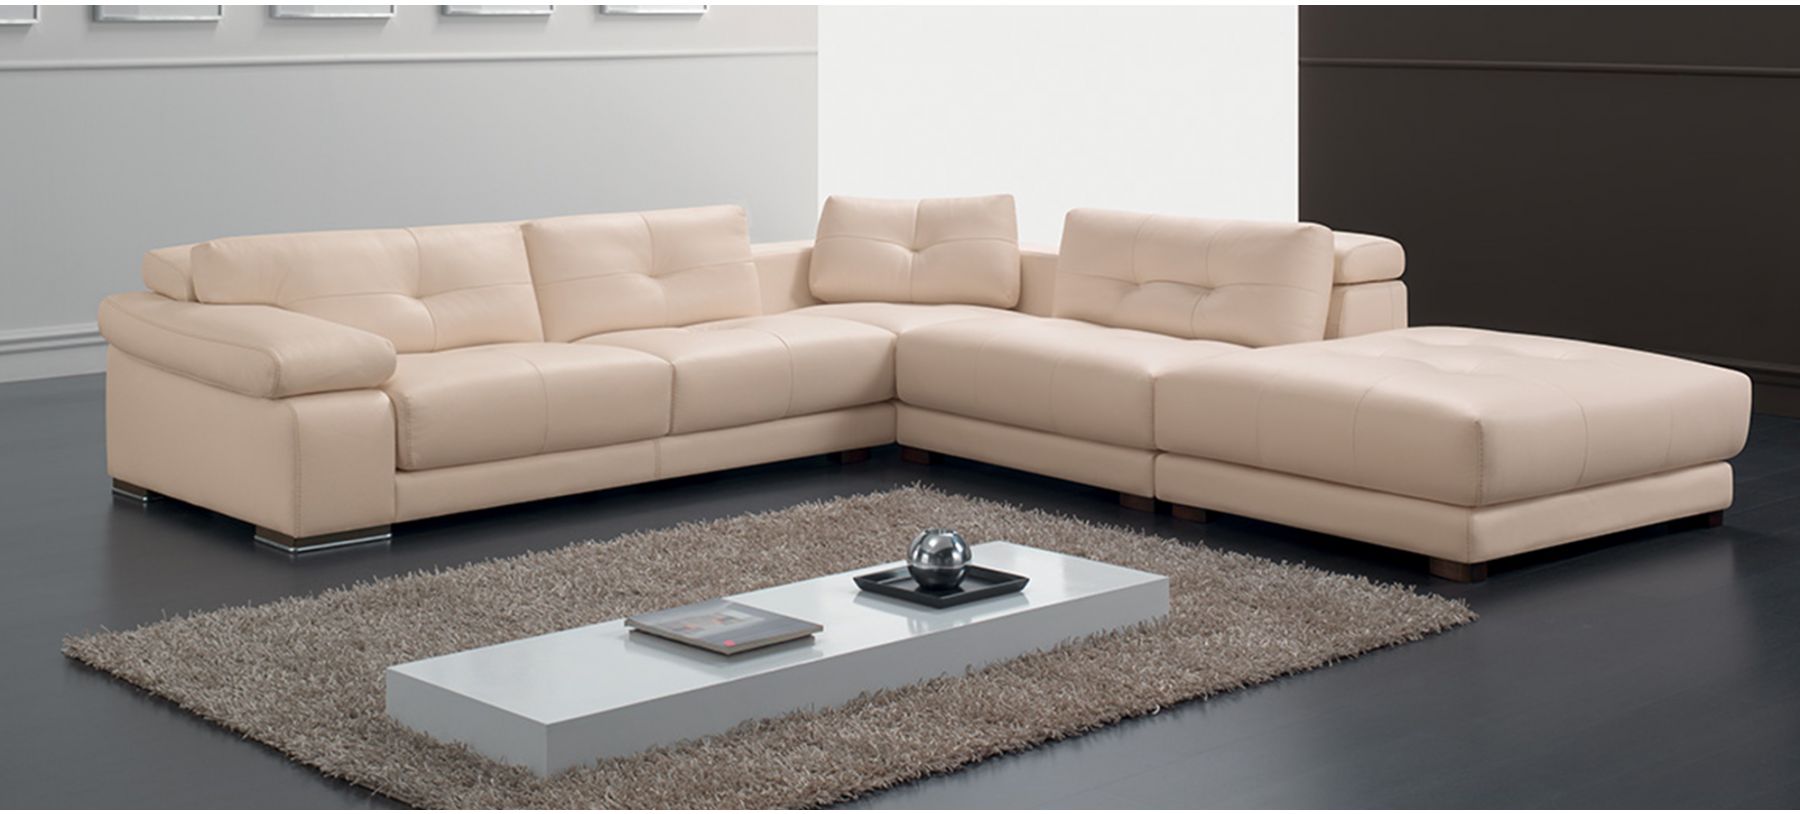 Santer Peach Rhf Leather Corner Sofa